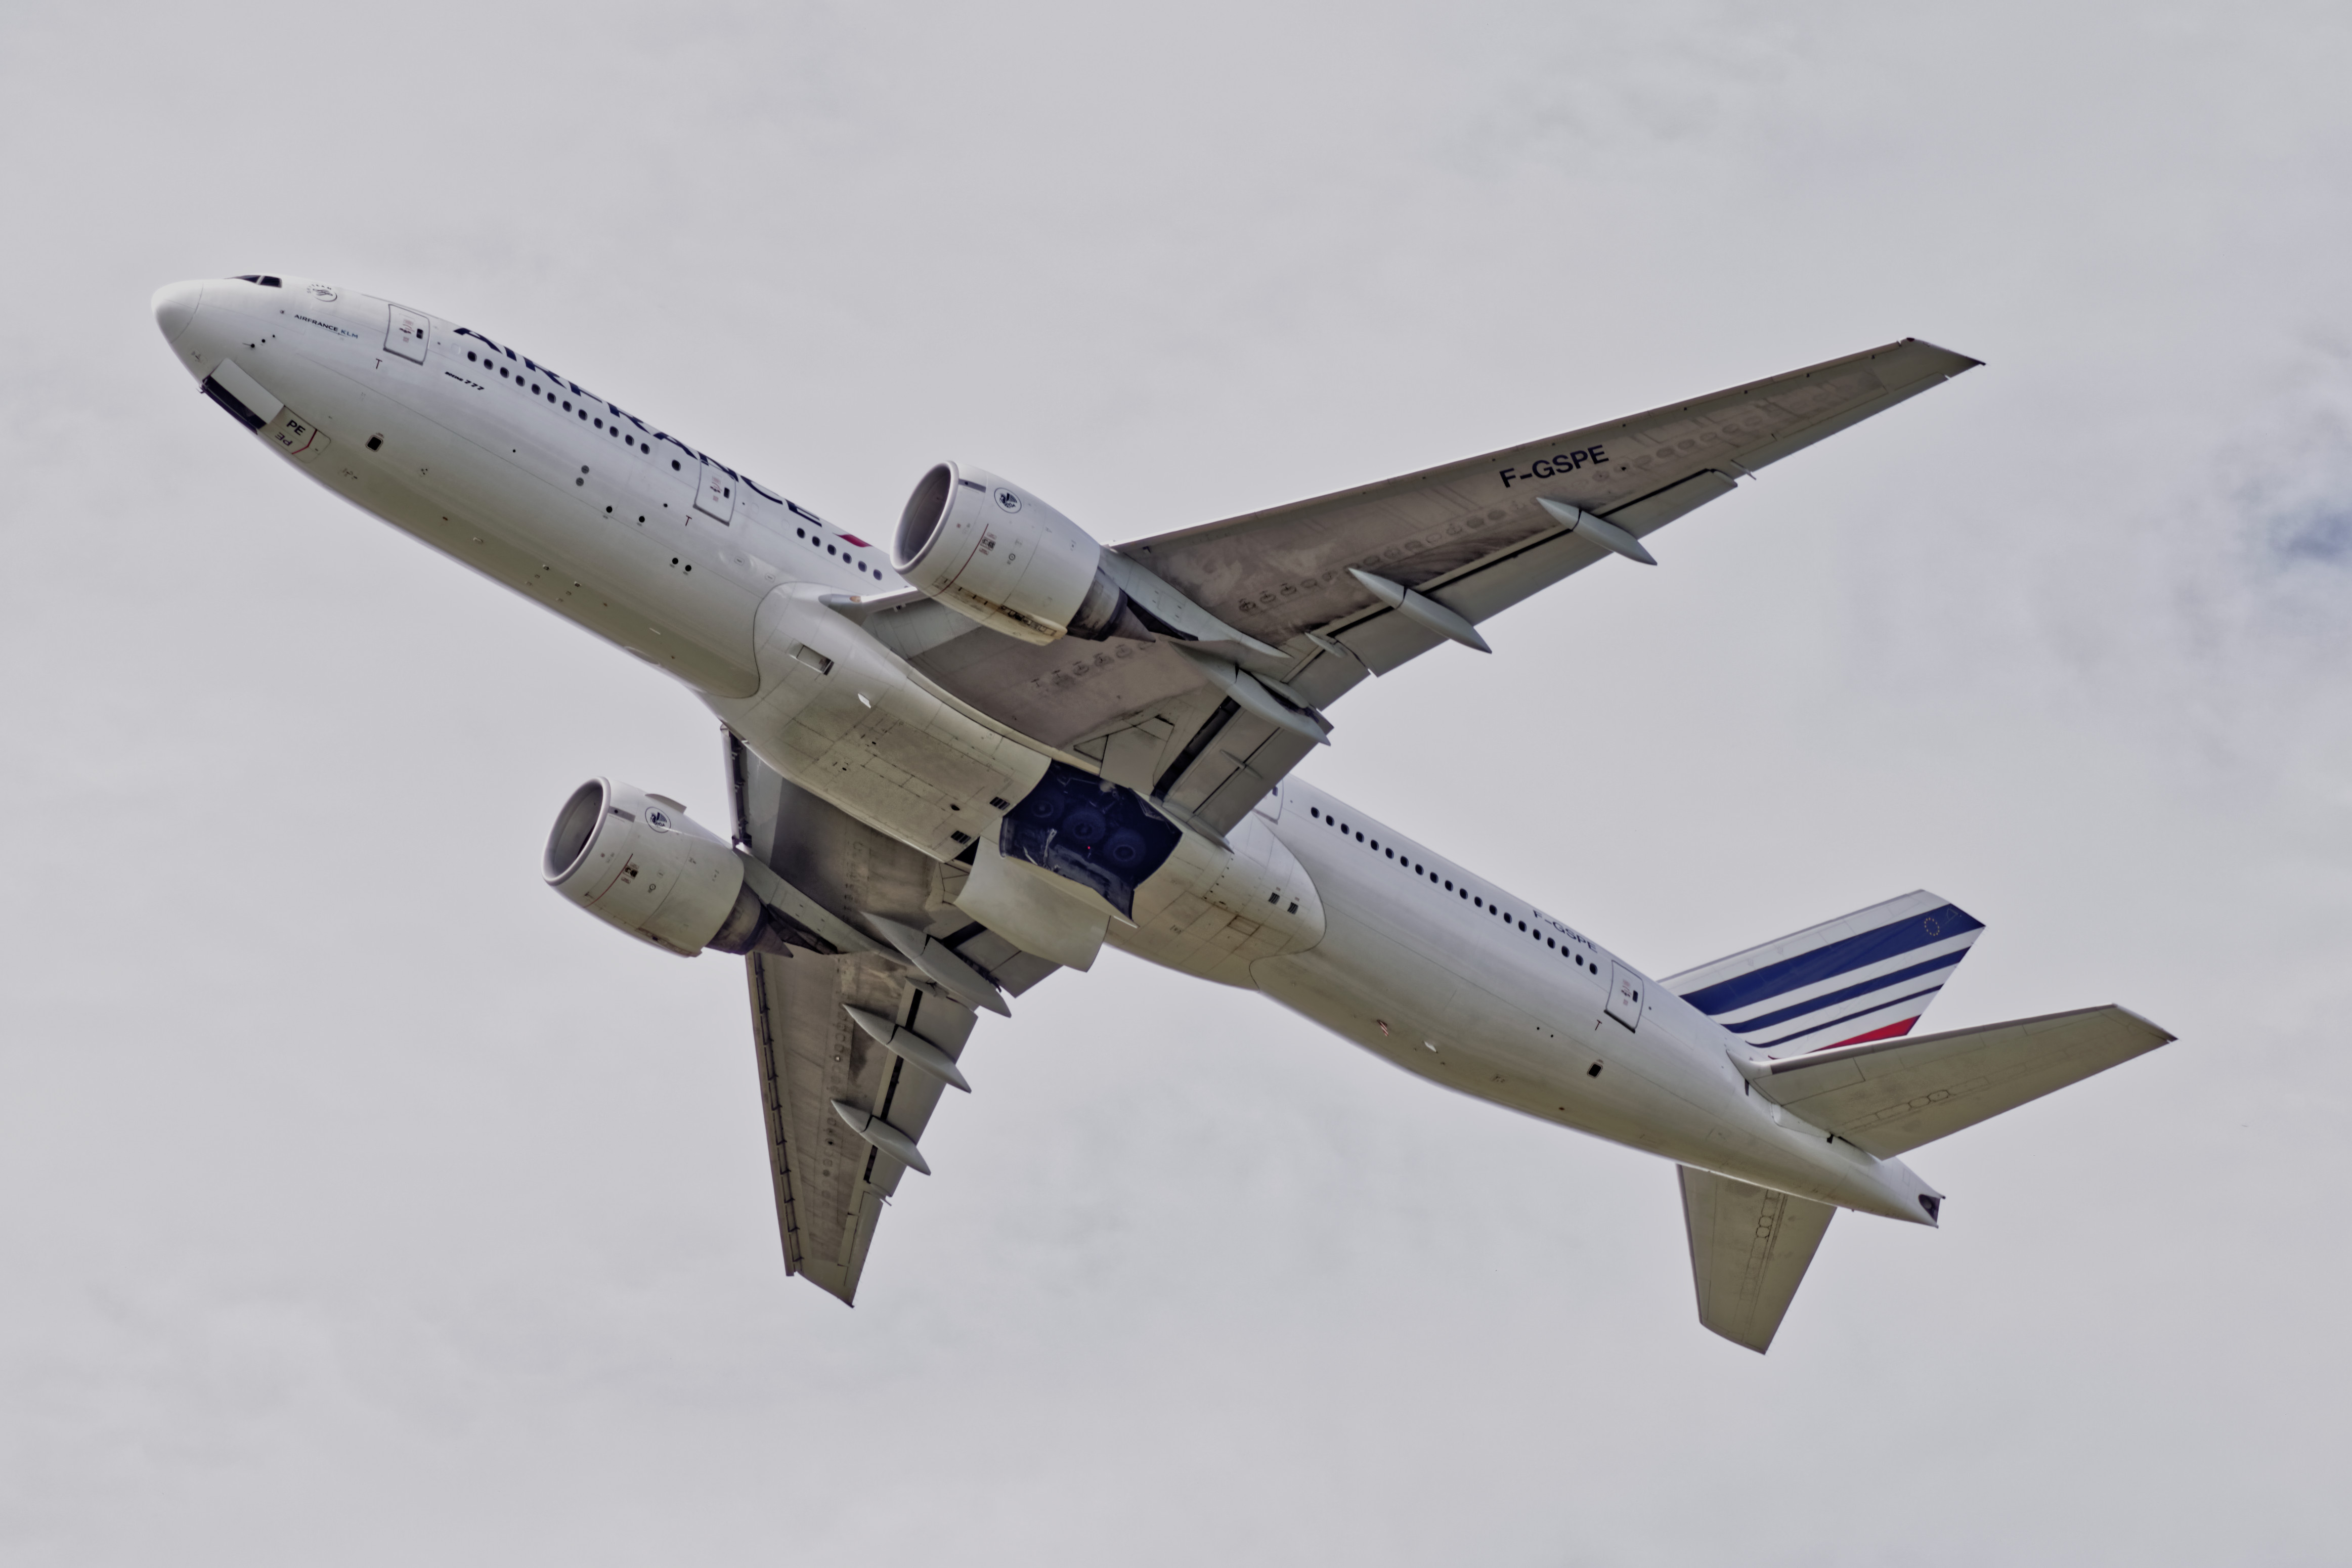 F-gspe - boeing 777-200er air france photo